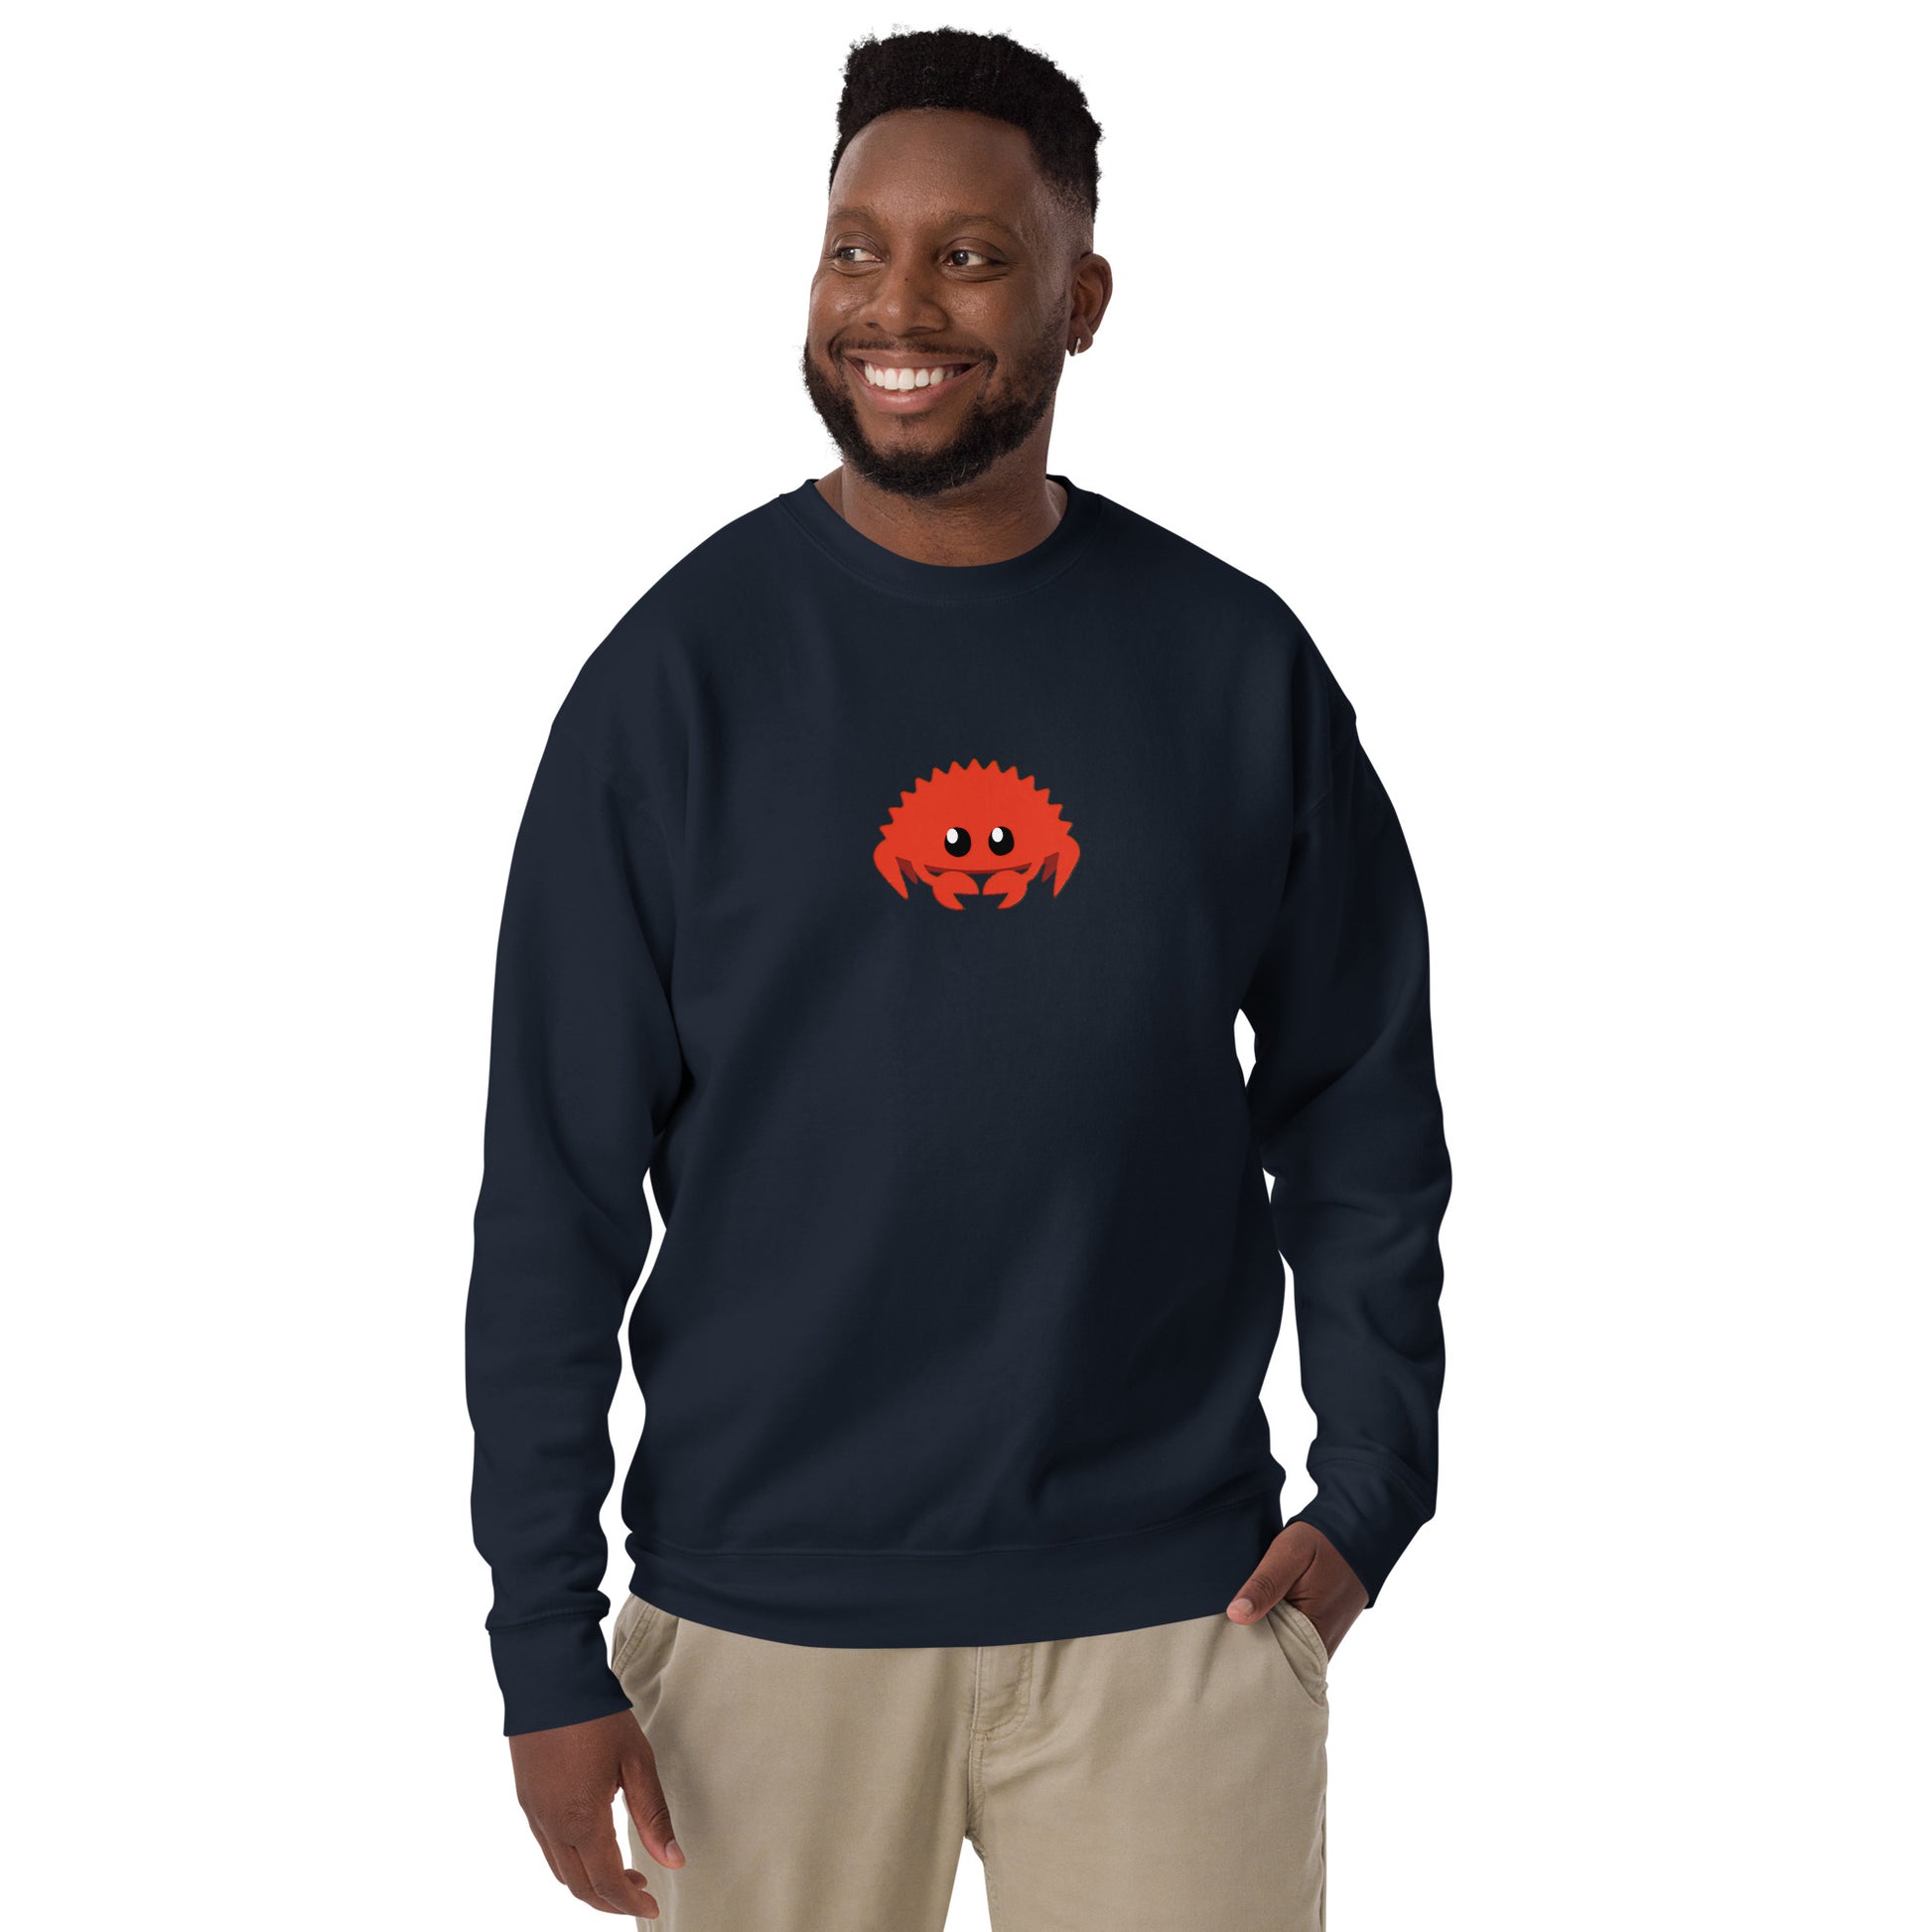 "RUST" Unisex Premium Sweatshirt The Developer Shop